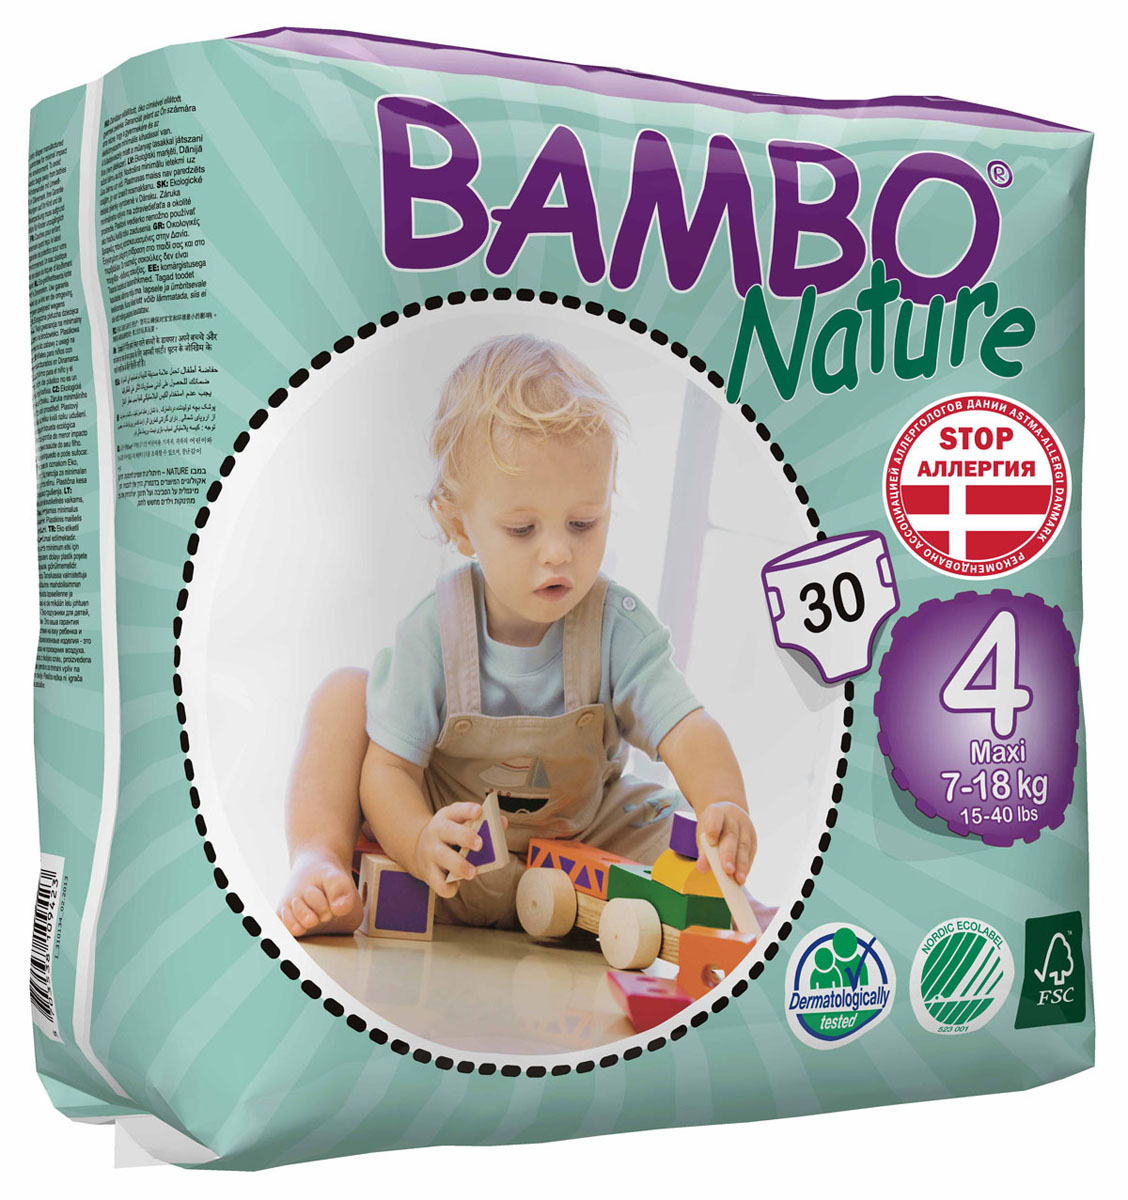 Bambo Nature    -, Maxi, 7-18 , 30  - Bambo Nature310134        Bambo Nature,       .  ,      ,   . -    - ,       .          .    7  18 .  Bambo Nature   . .